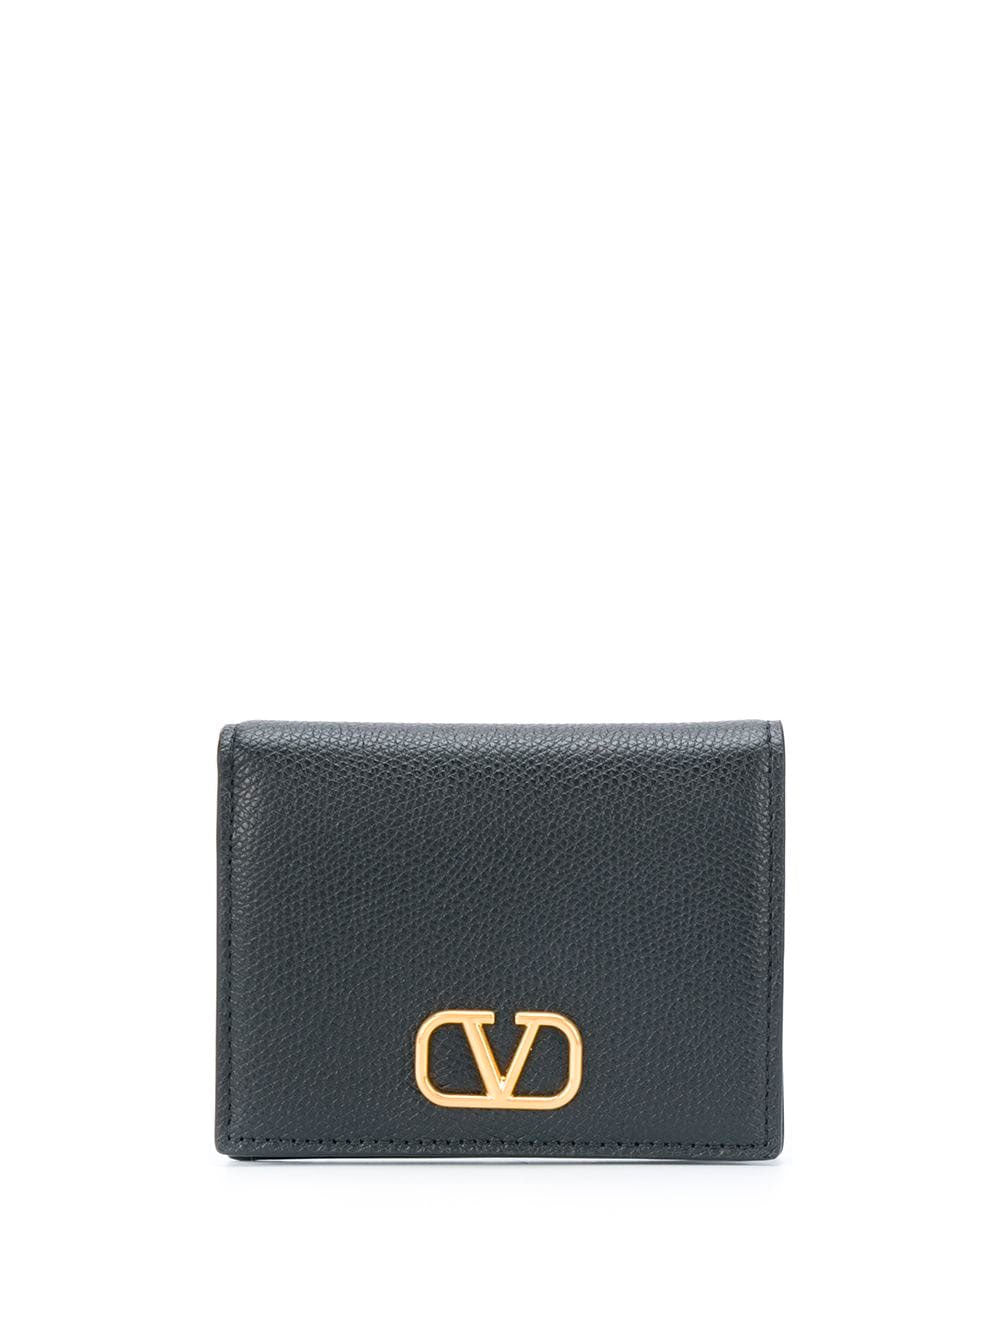 VLogo Signature compact wallet